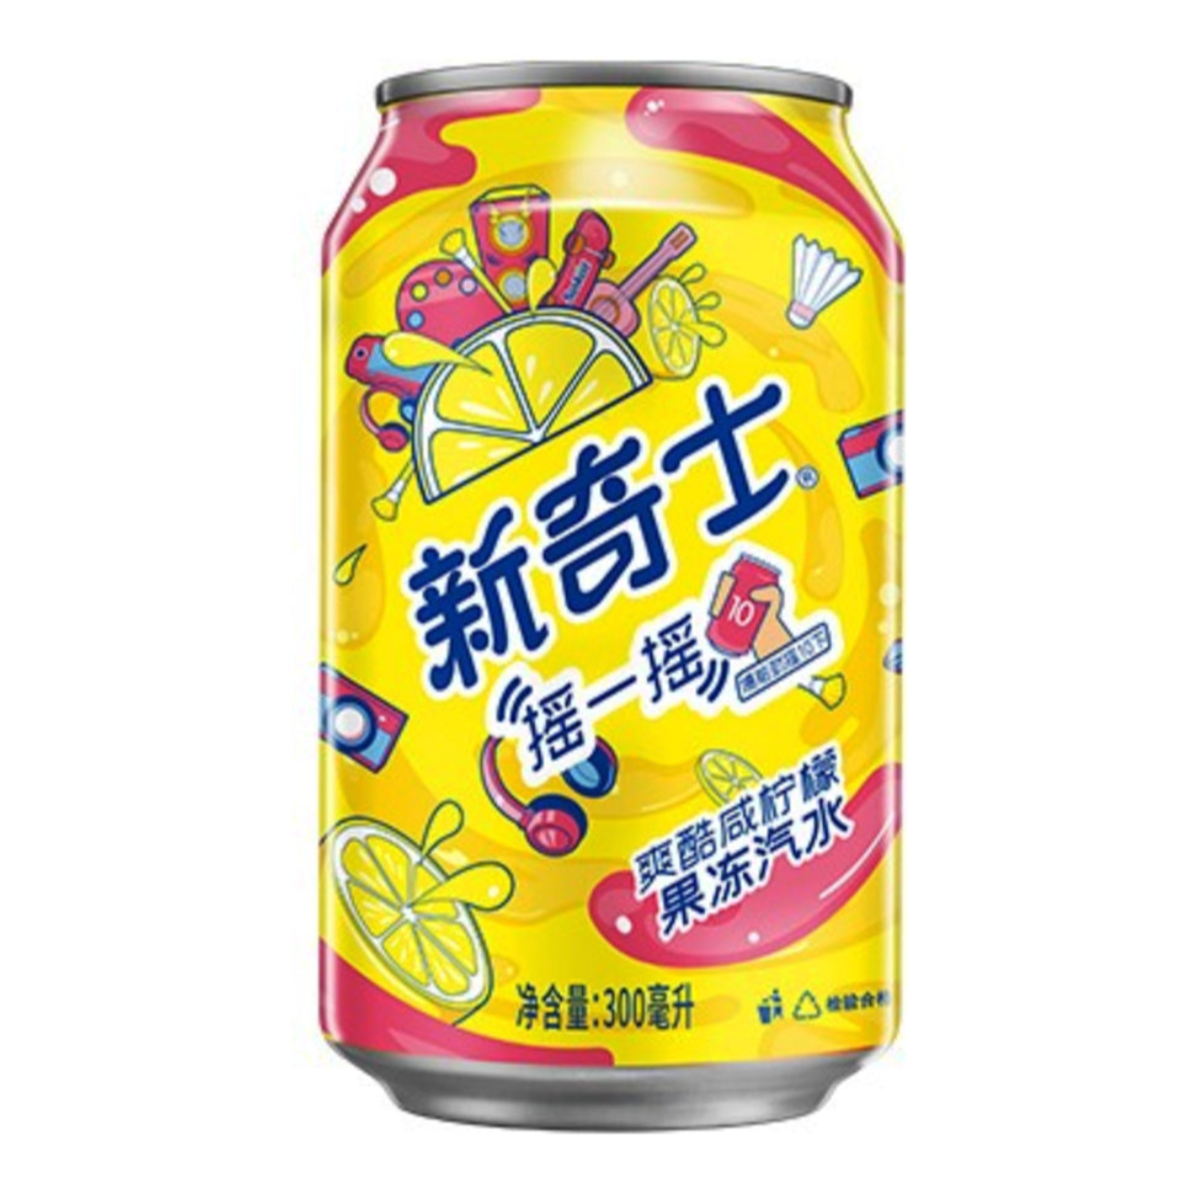 Sunkist Cool Salty Lemon Jelly Soda (300ml) (China) 12-Pack